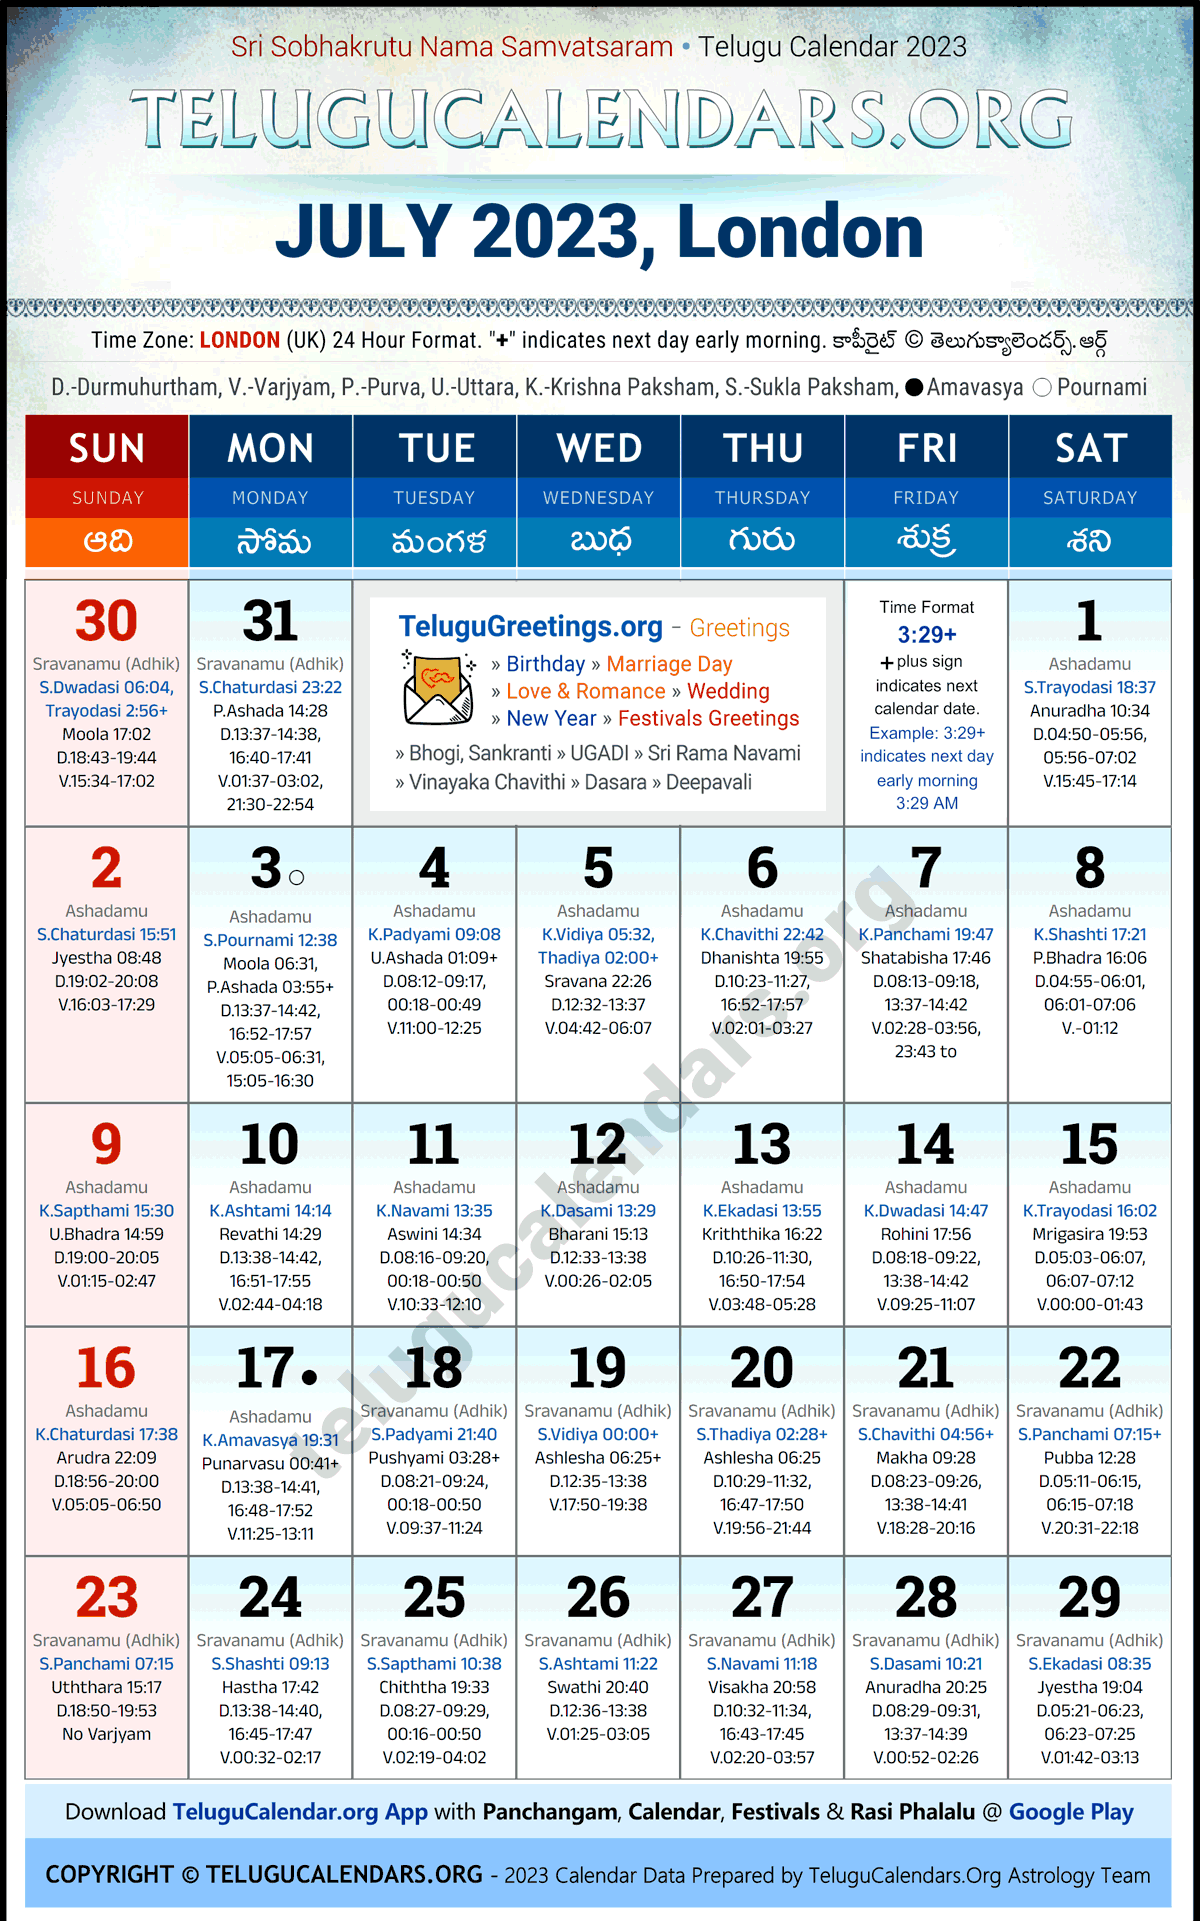 Telugu Calendar 2023 July Festivals for London